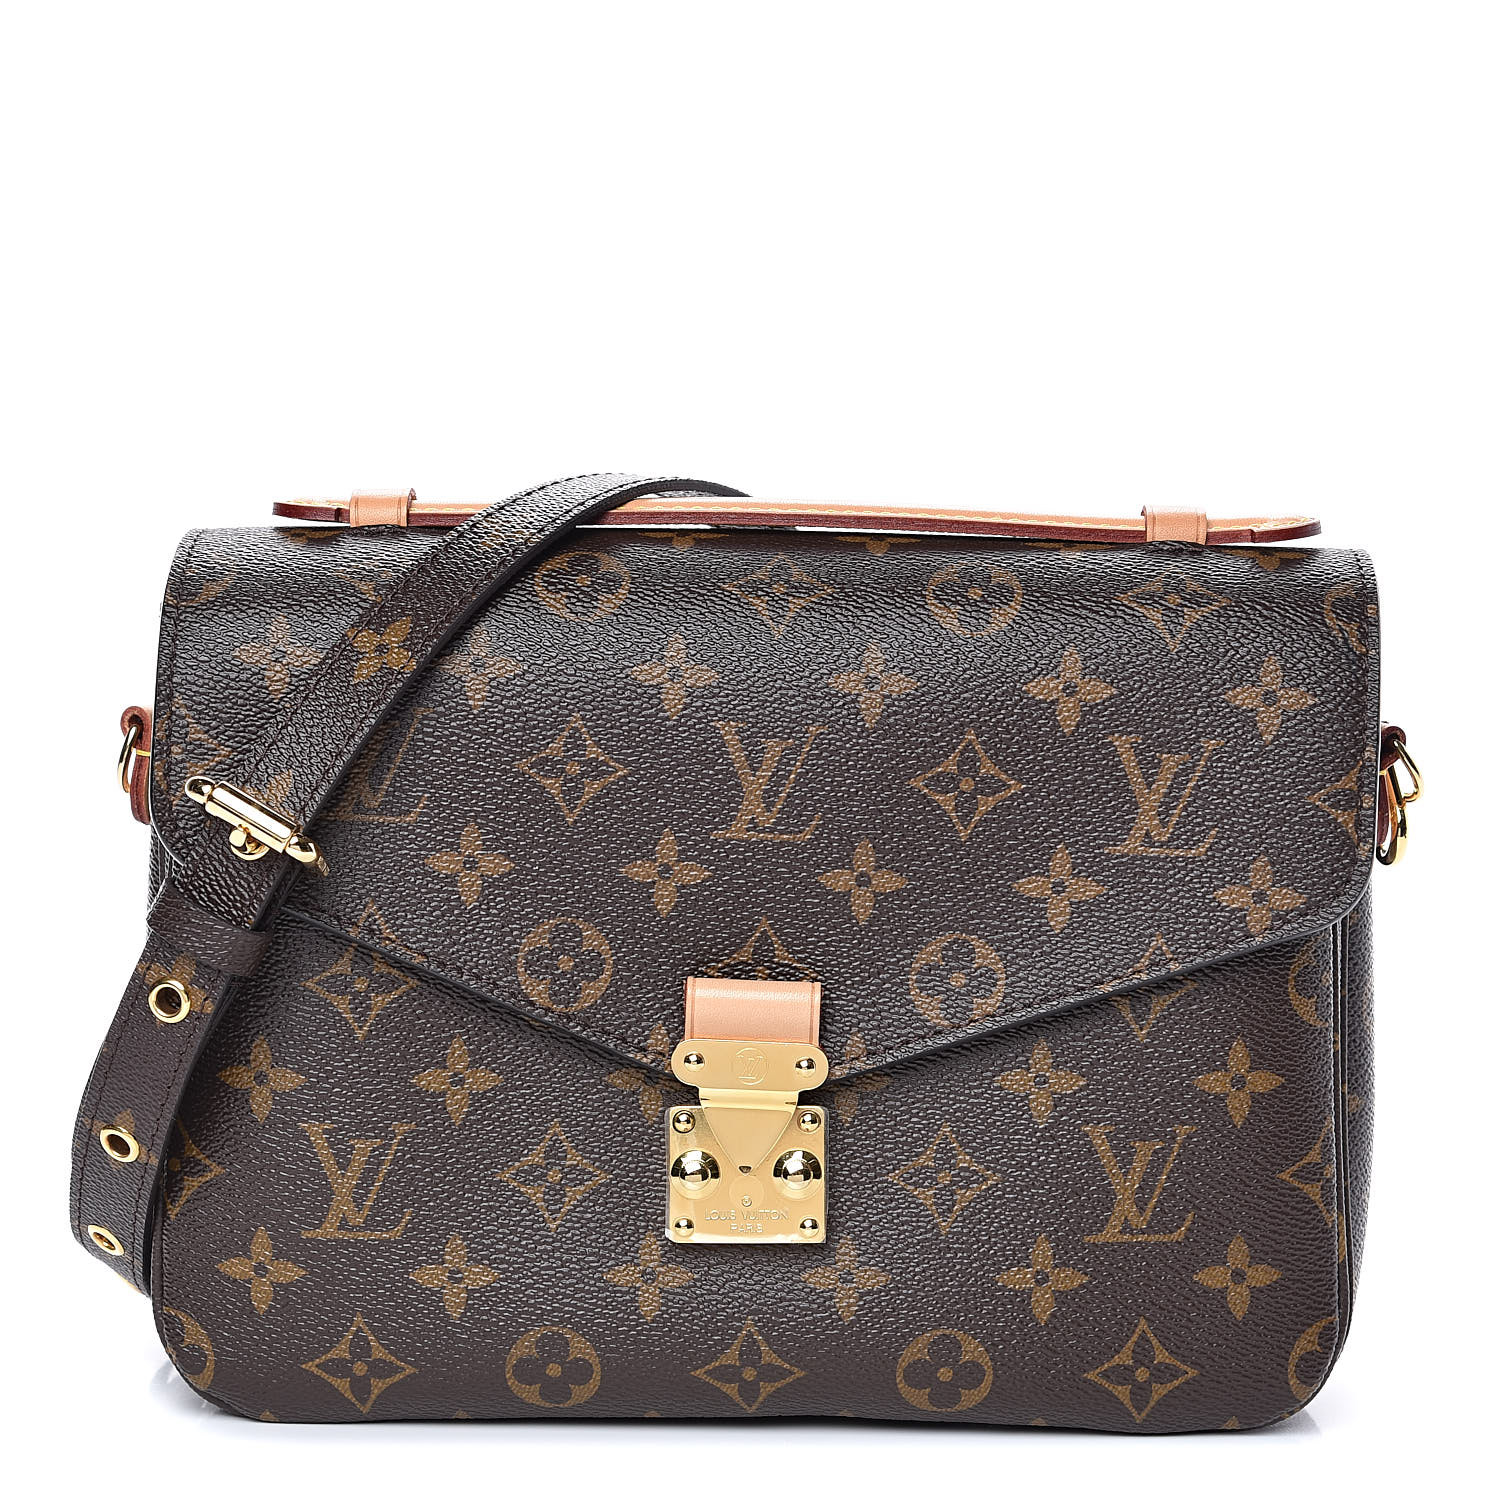 Louis Vuitton Handbags Forever Fullerton